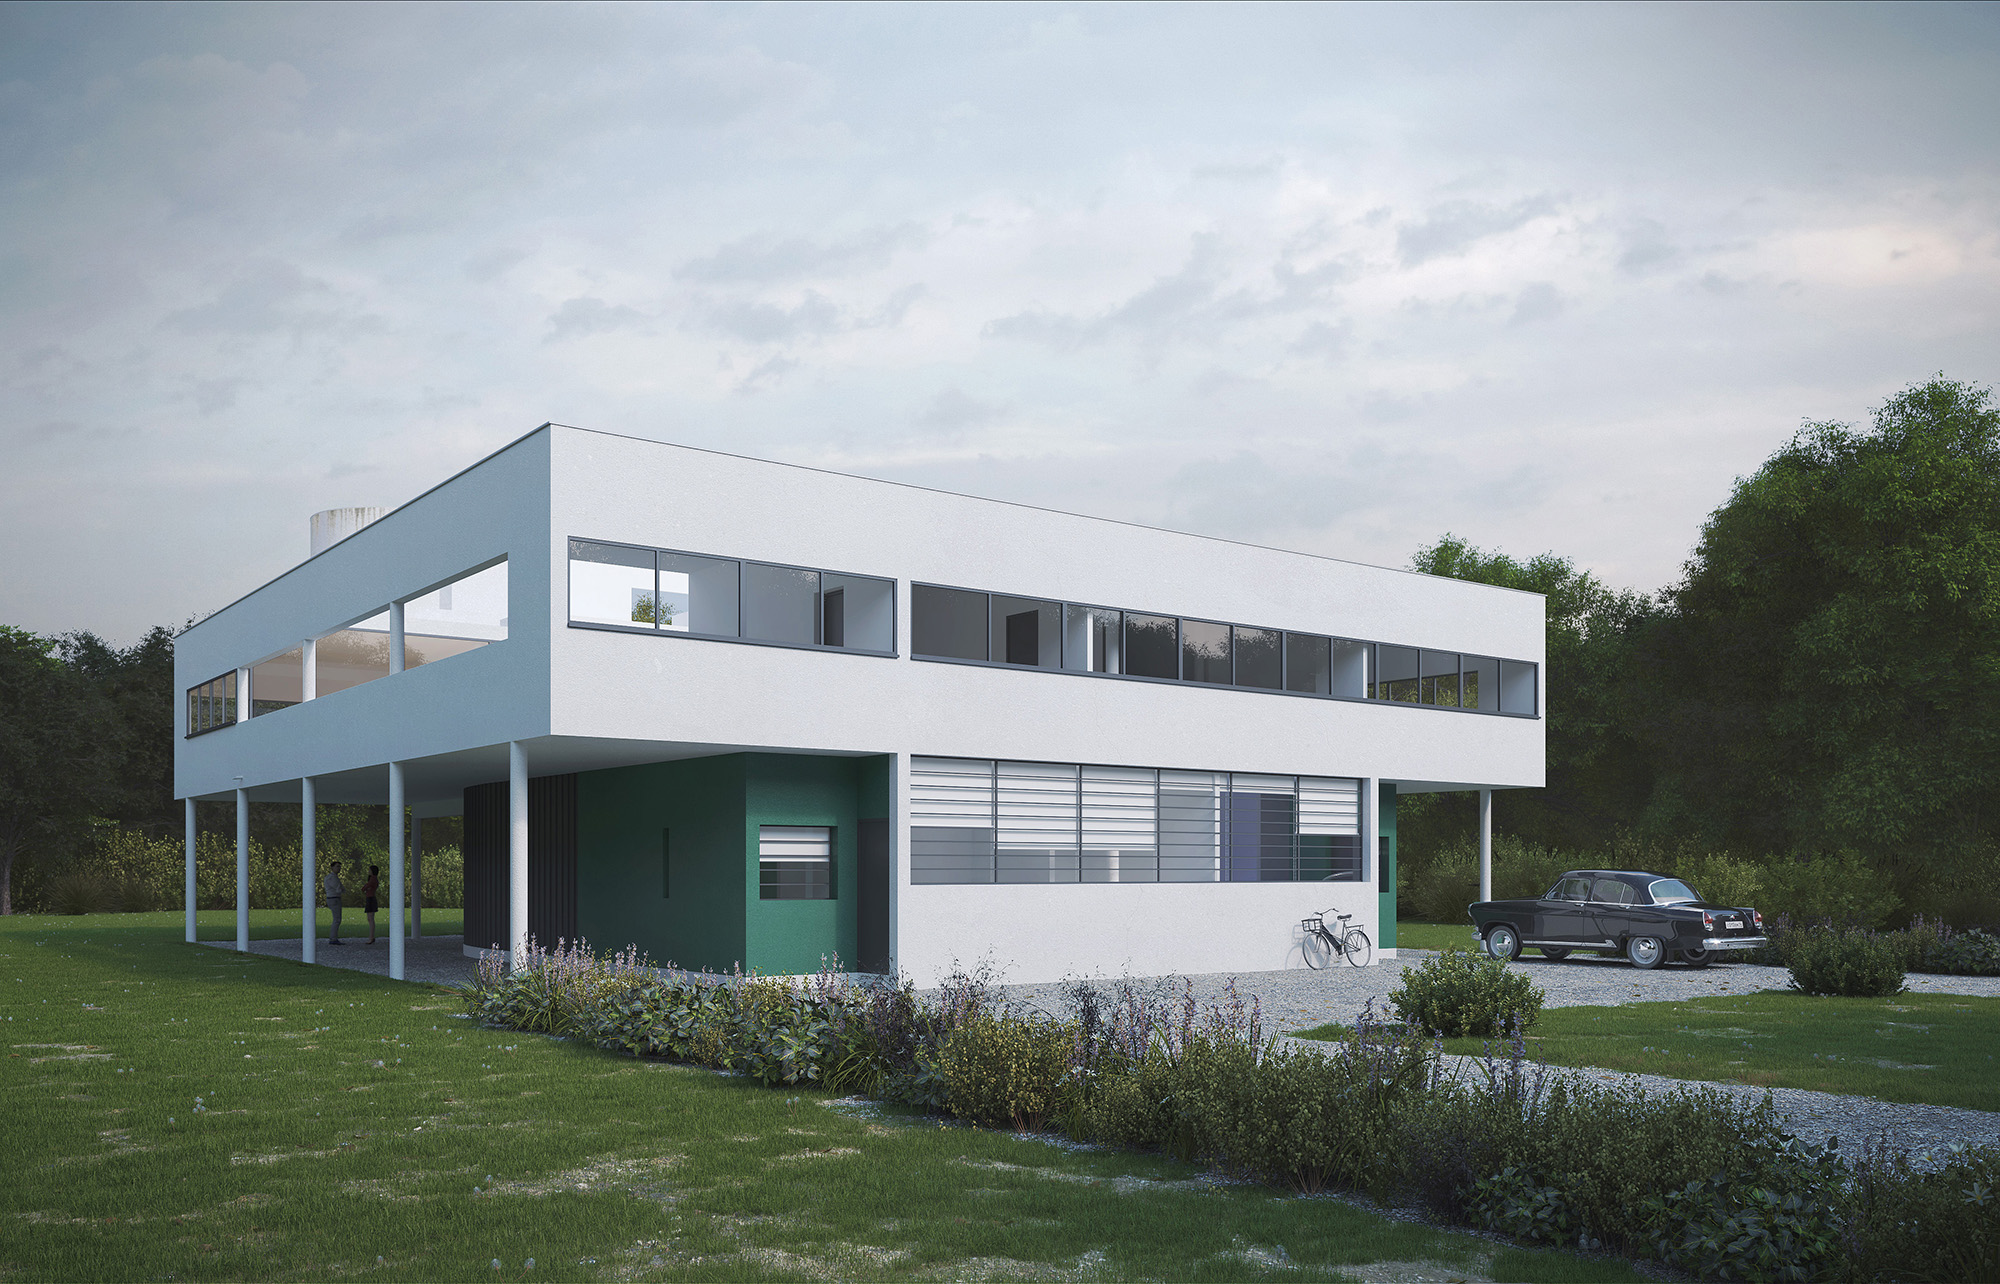 Villa Savoye -P2 - Le Corbusier - Poissy (78) - En collaboration avec KOMODO - 2019